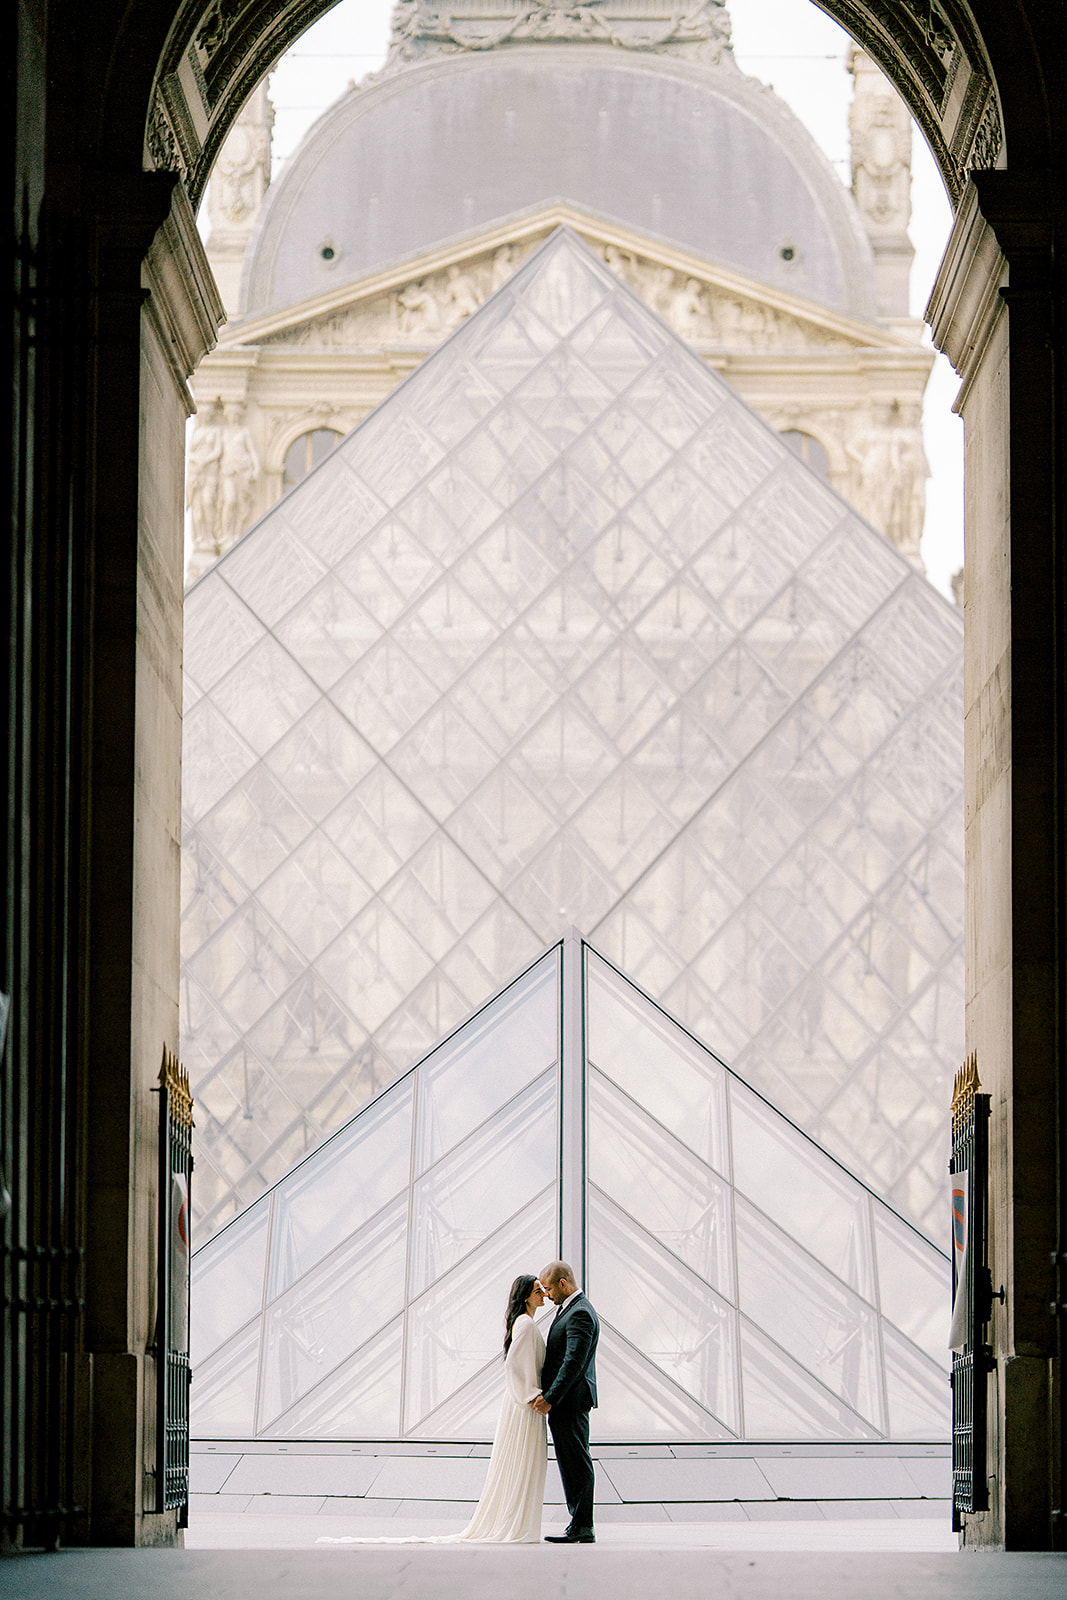 The best Engagement photos in Paris France | Chernogorov Photography Destination Wedding Photographers